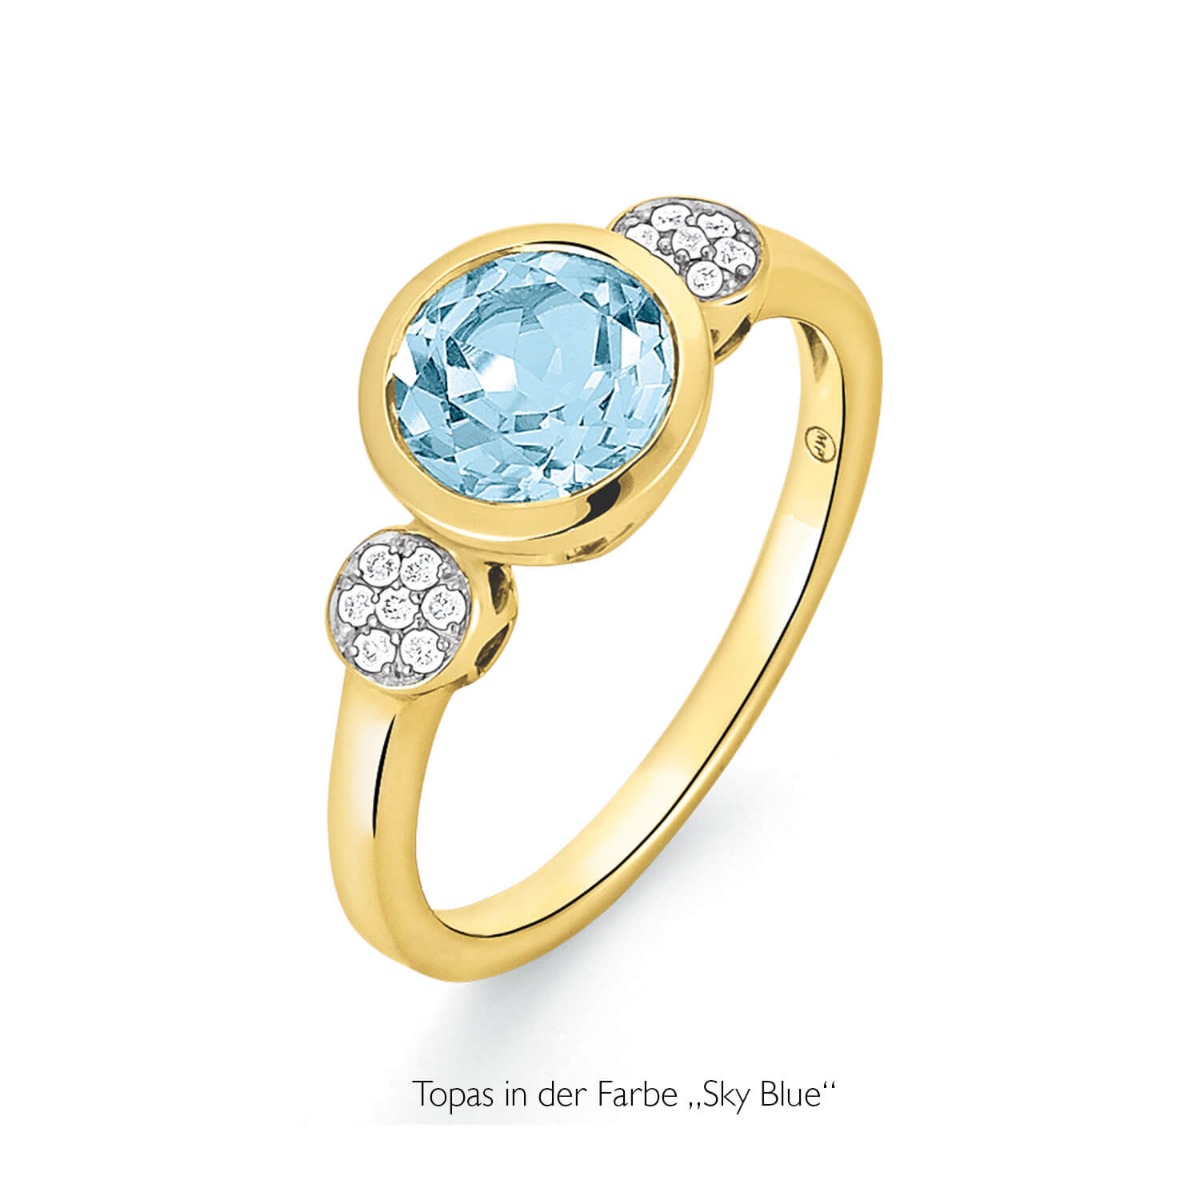 Ring mit Topas in der Farbe "Sky Blue"